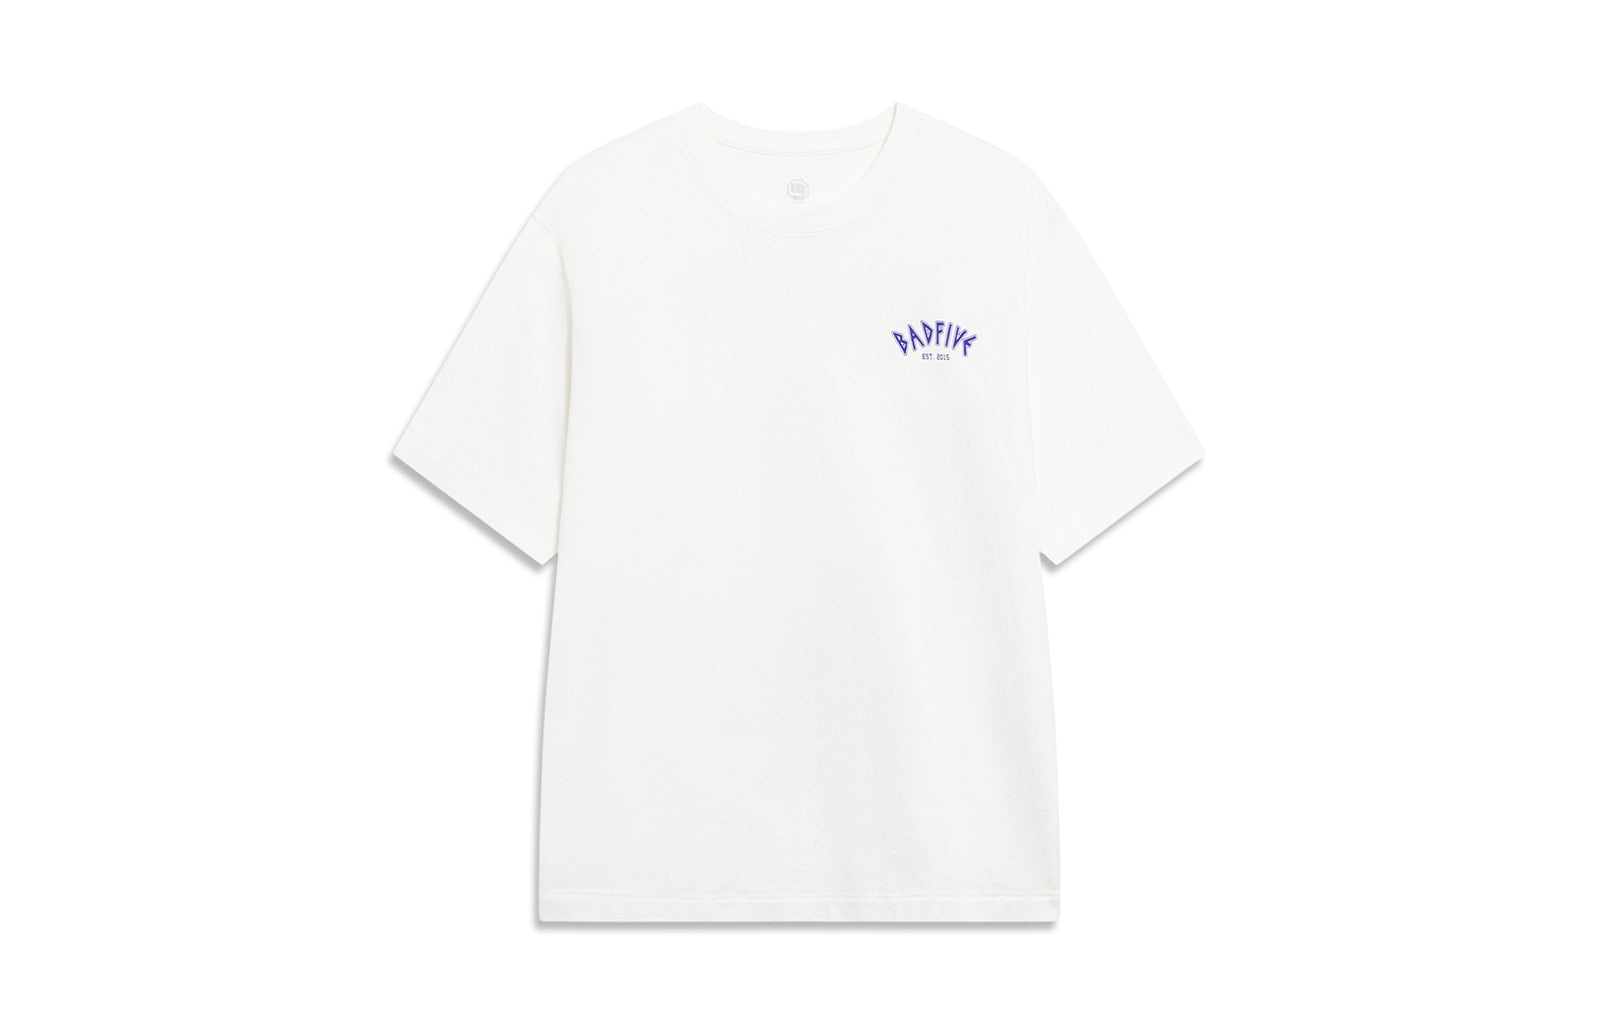 Li-Ning BadFive Force A Turnover Graphic T-shirt 'White' AHST289-5 - 2